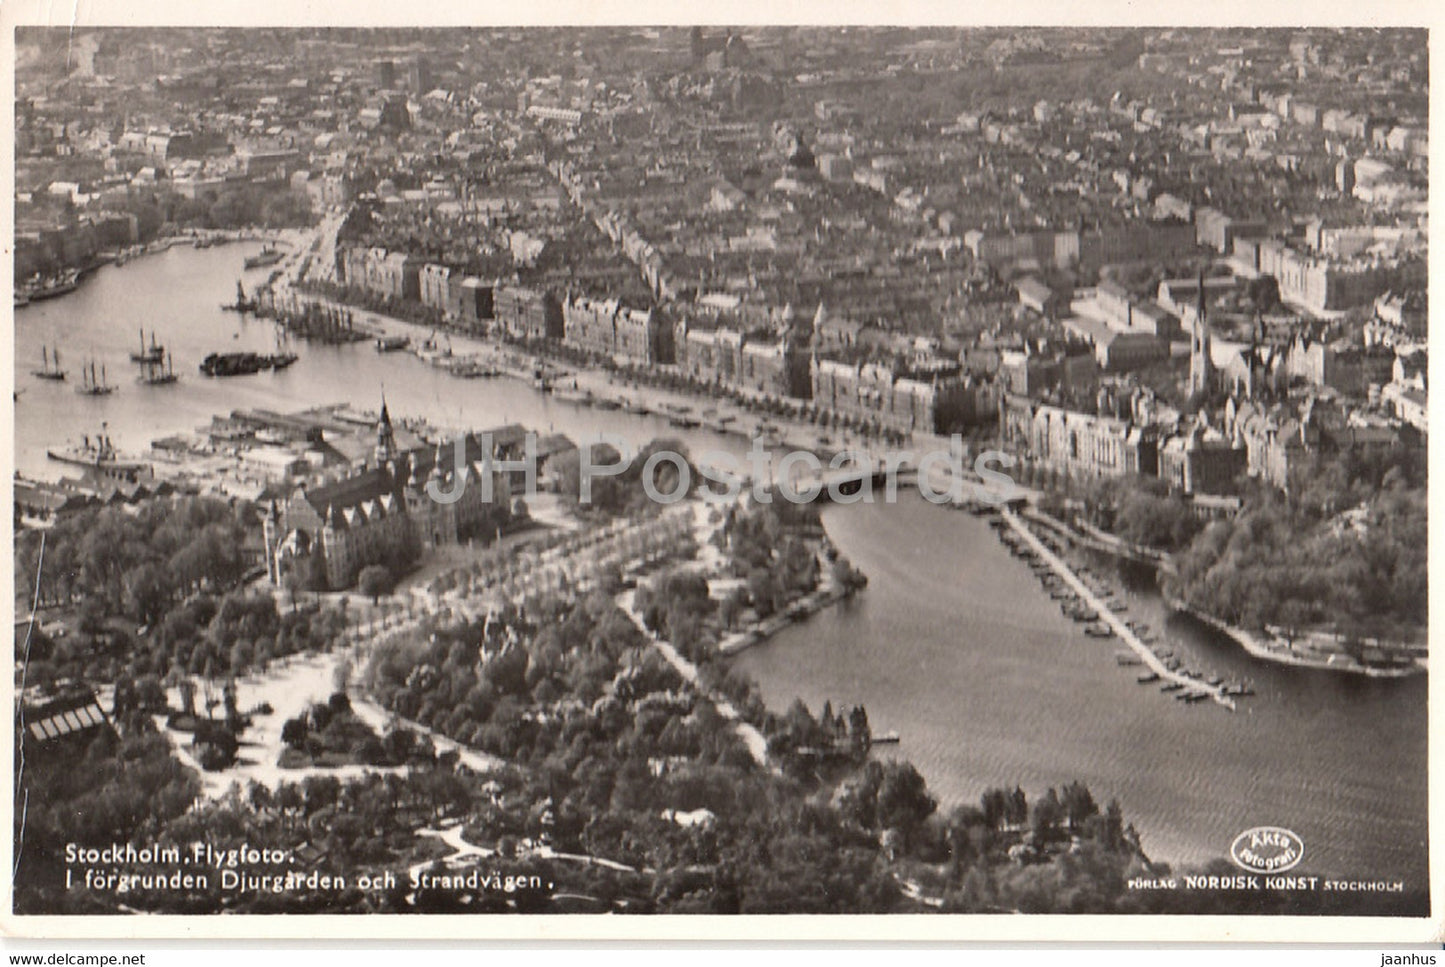 Stockholm - Flygfoto - I forgrunden Djurgarden och Strandvagen - aerial view - old postcard - 1938 - Sweden - used - JH Postcards